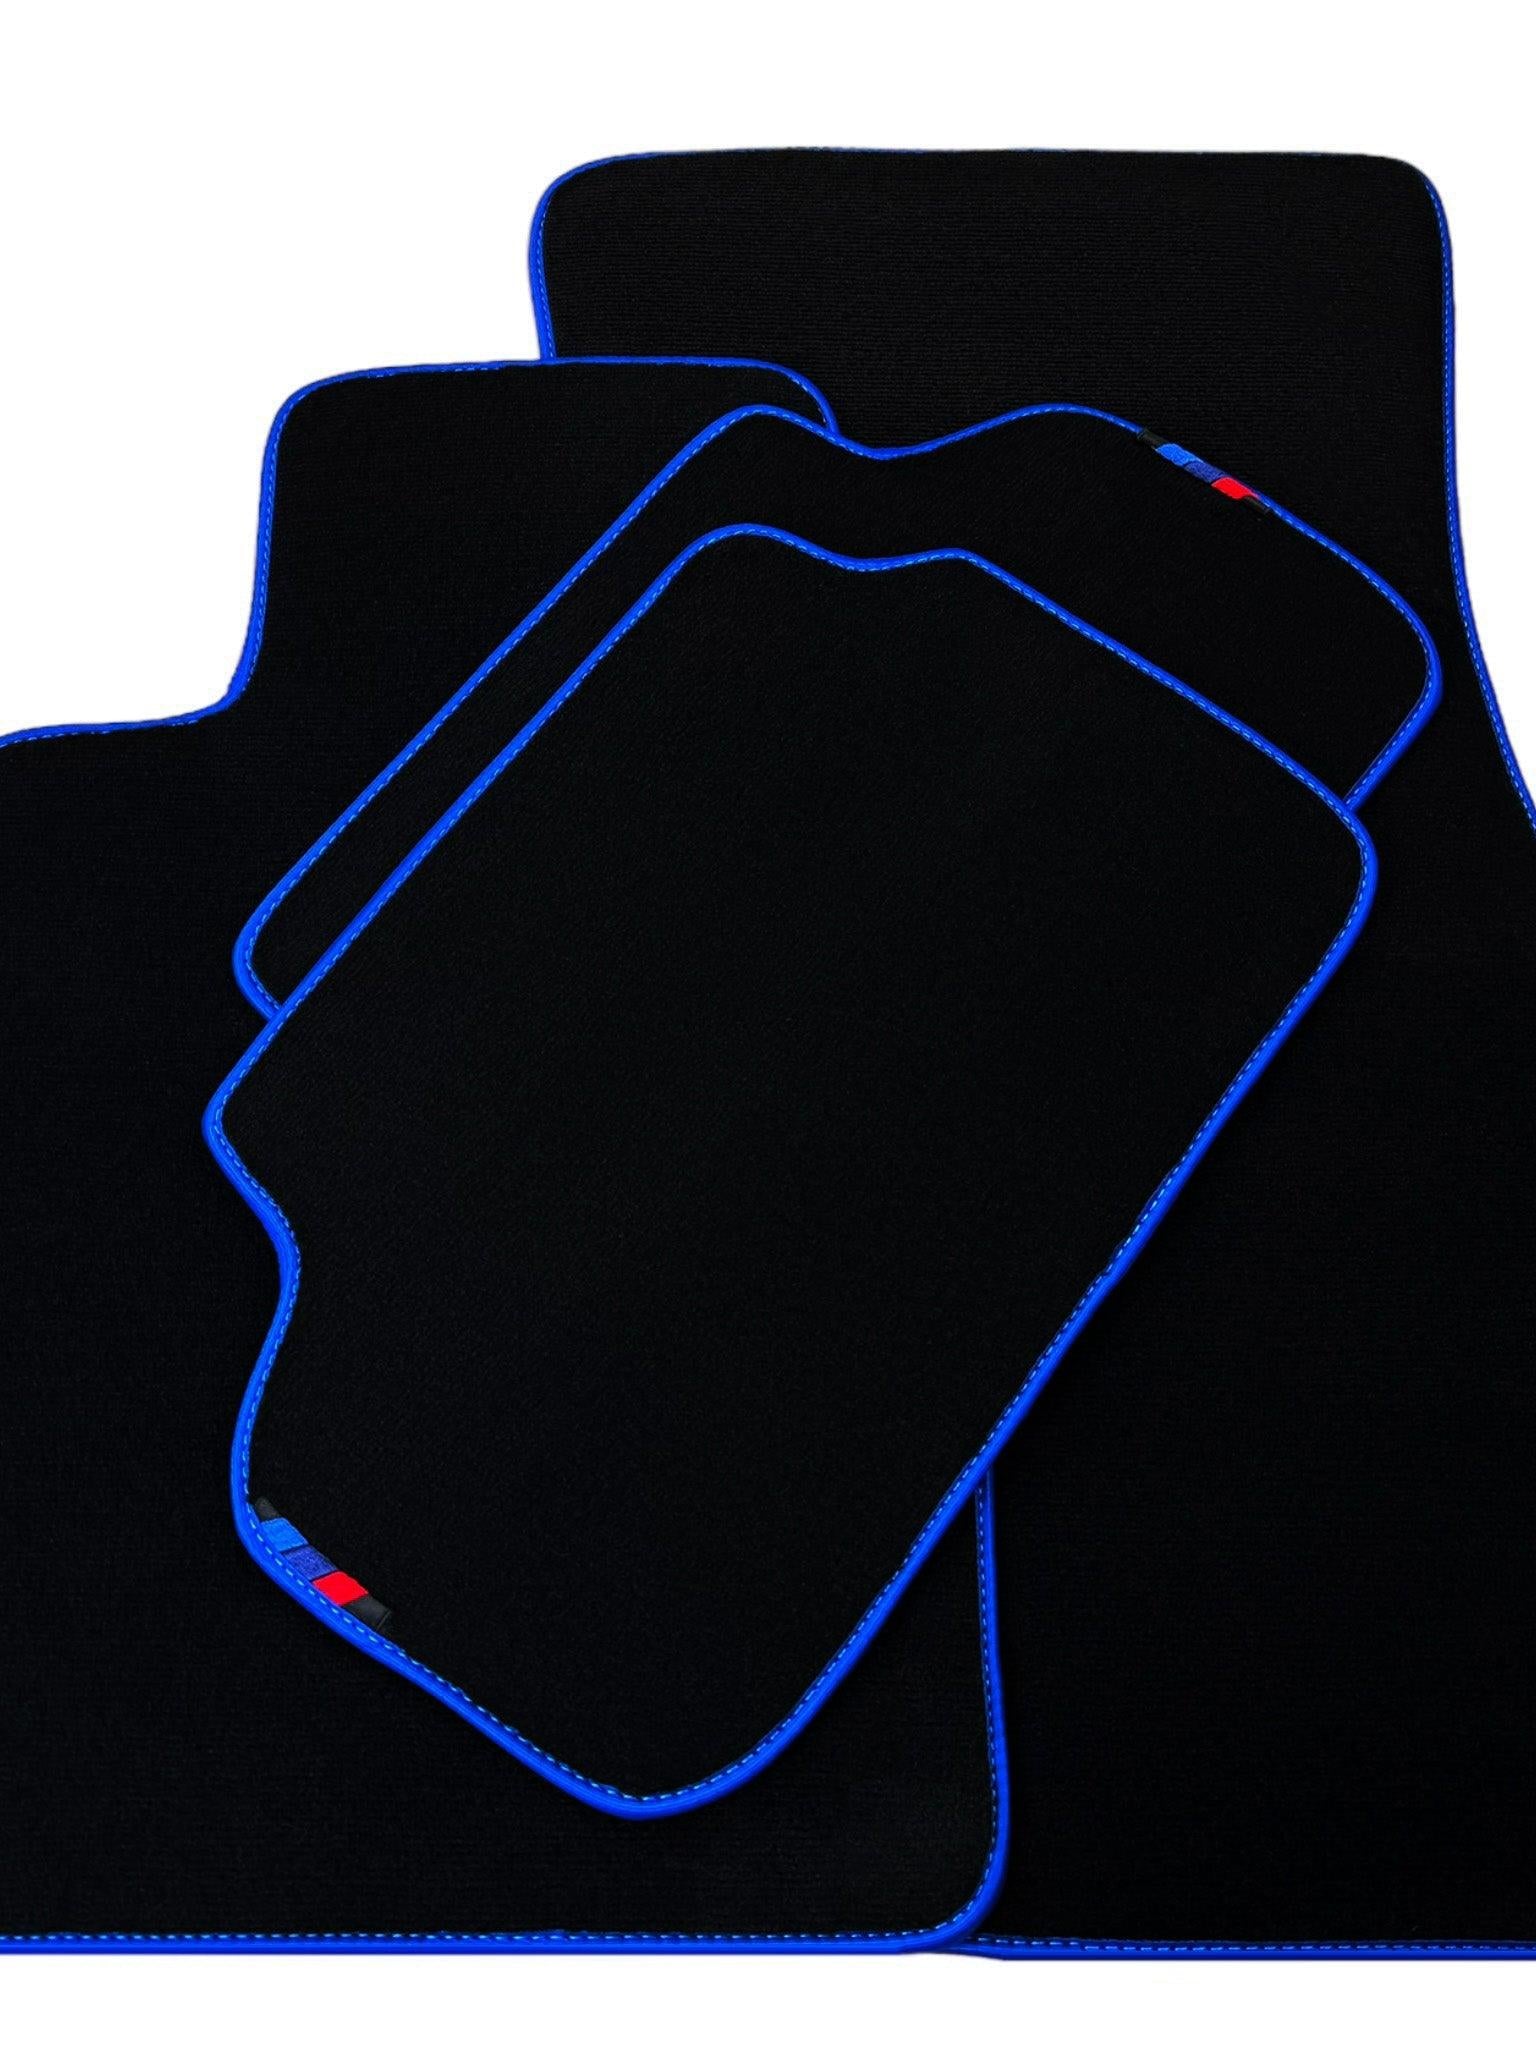 Black Floor Floor Mats For BMW 6 Series F12 | Fighter Jet Edition AutoWin Brand |Blue Trim